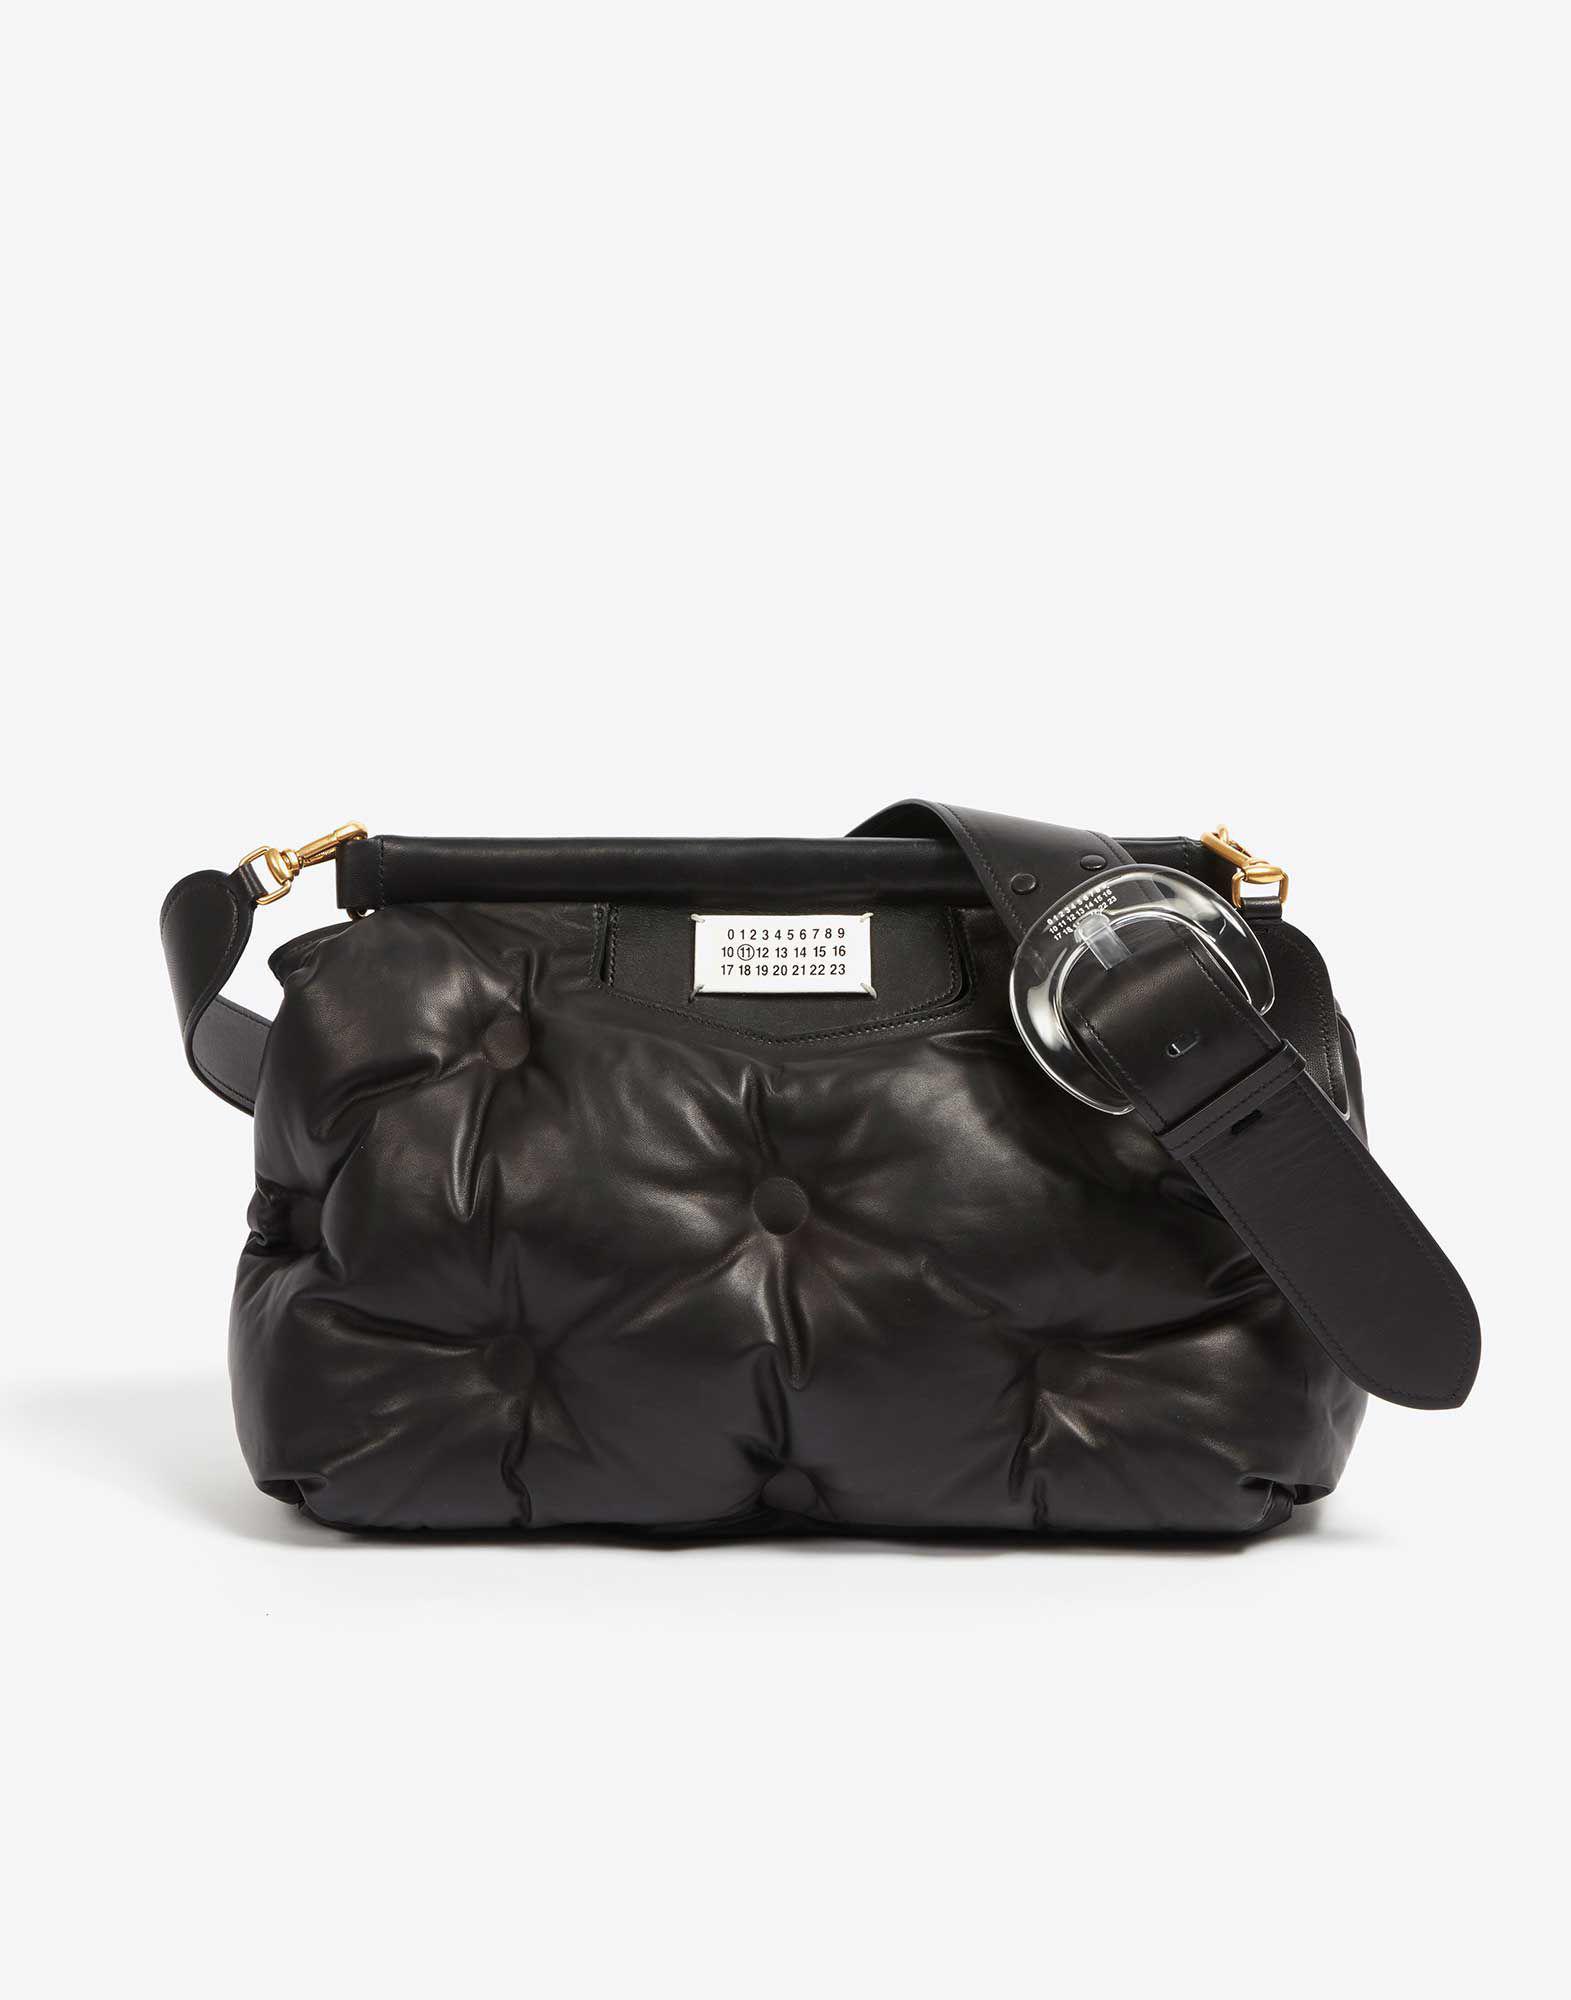 Maison Margiela Leather Glam Slam Bag in Black | Lyst